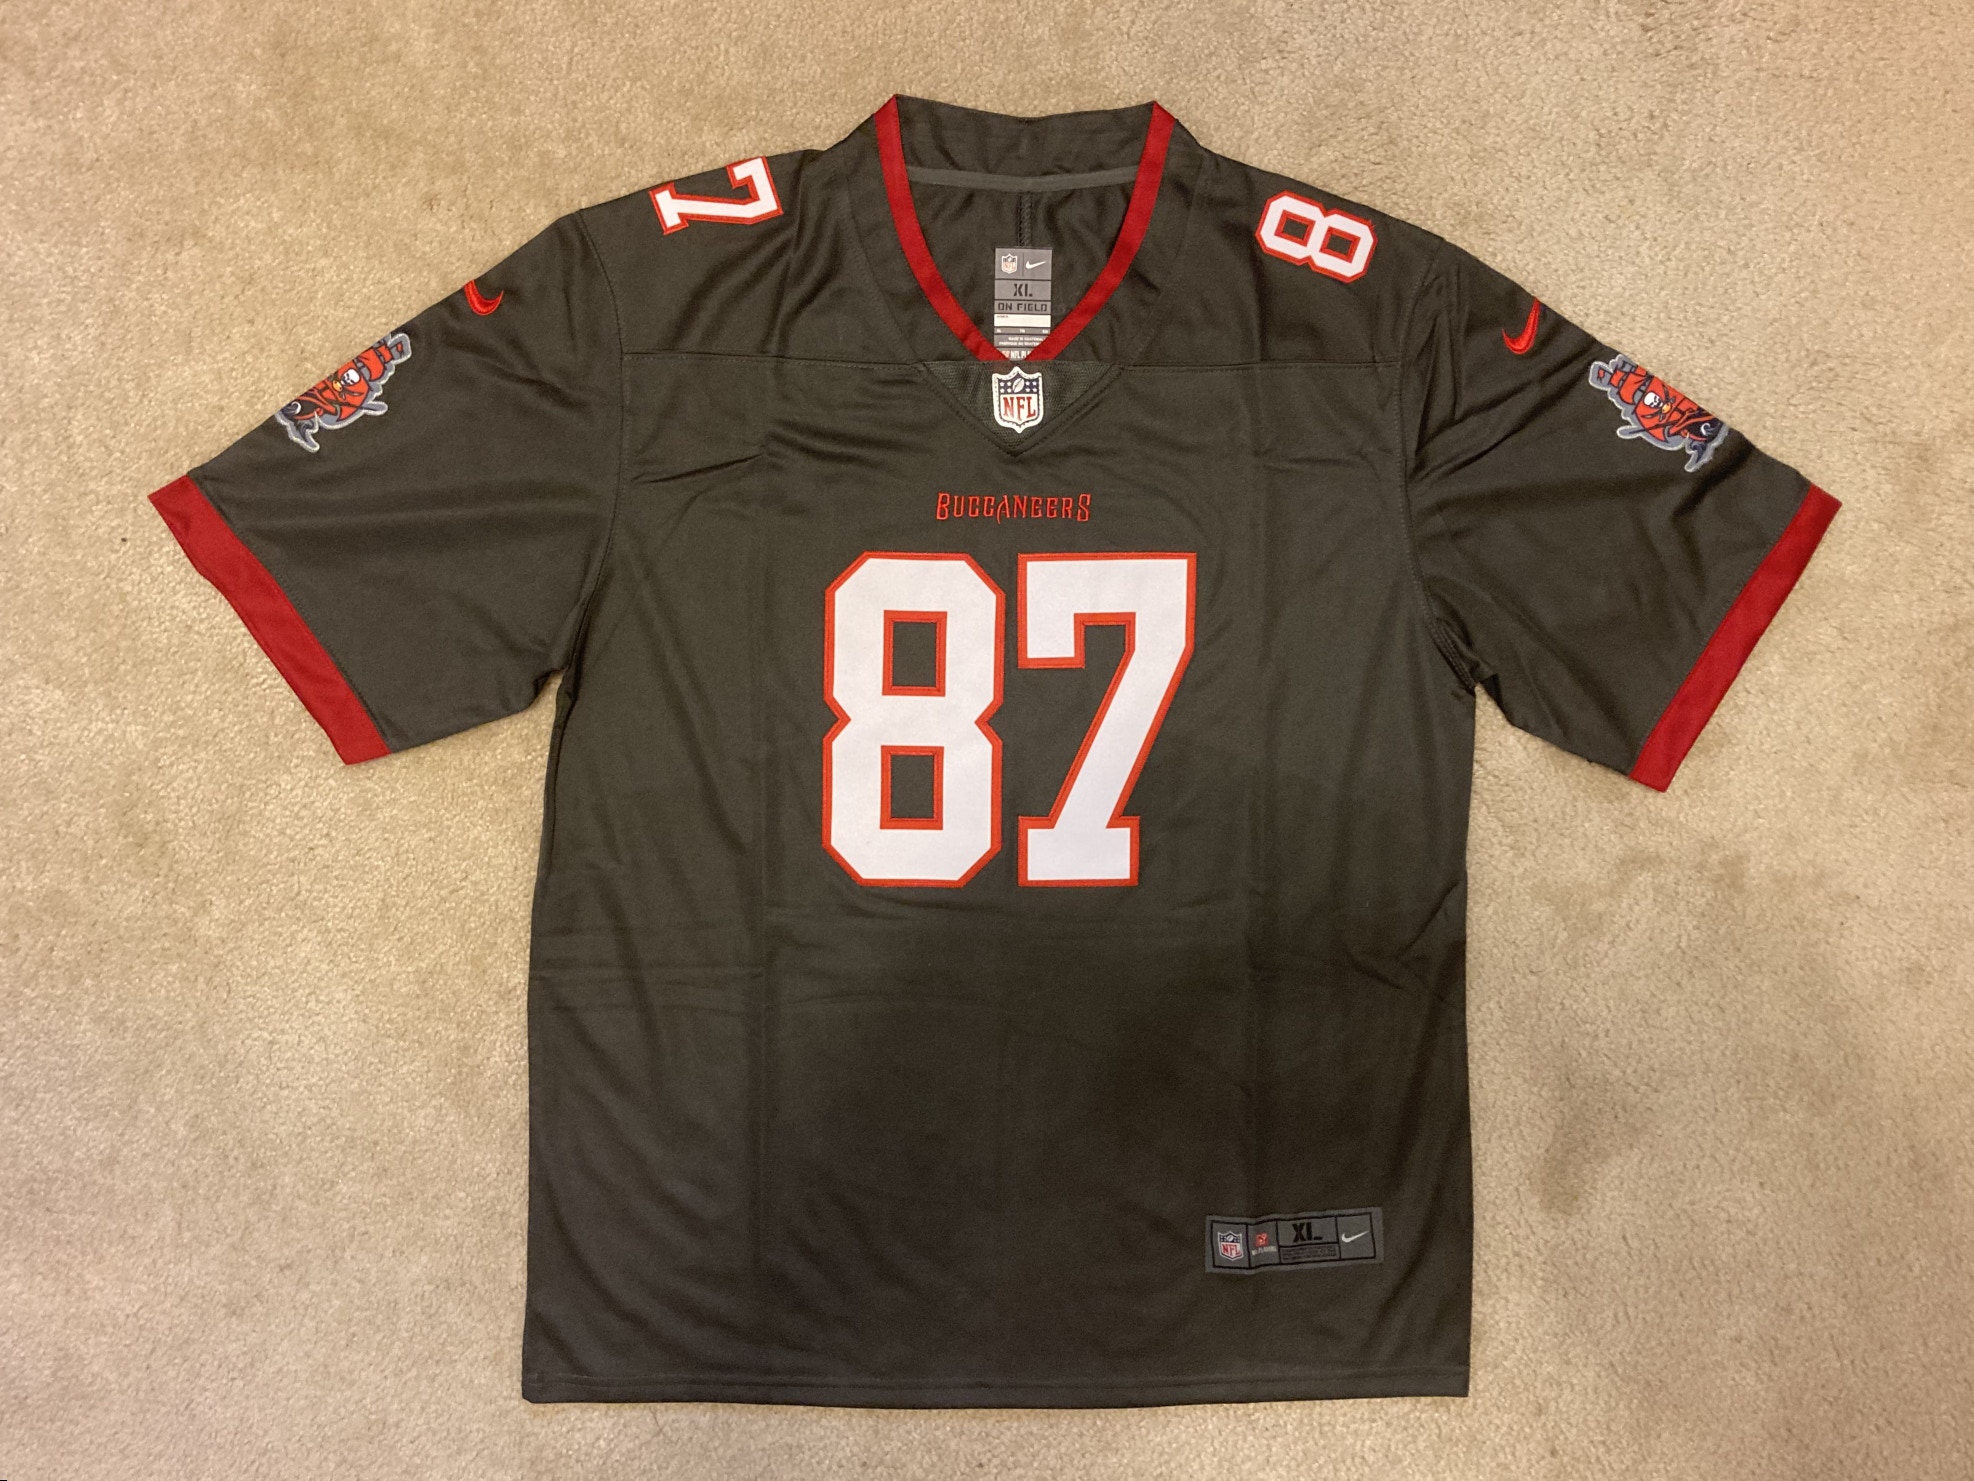 NEW - Men's Stitched Nike NFL Jersey - Rob Gronkowski - Buccaneers - XL & XXL - Tampa Bay Bucs